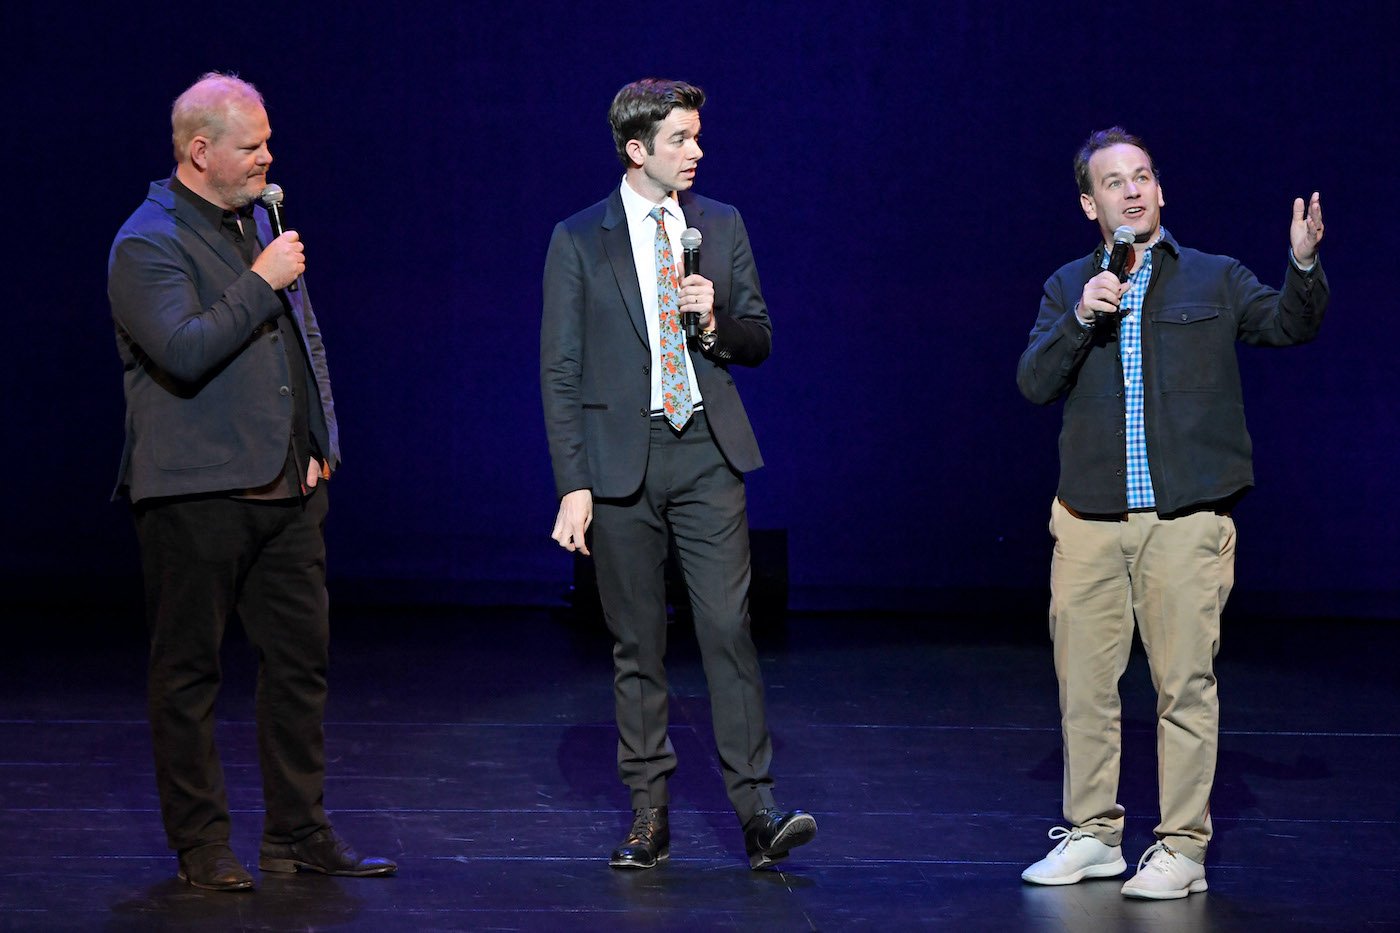 Jim Gaffigan, John Mulaney, and Mike Birbiglia performed onstage in 2019